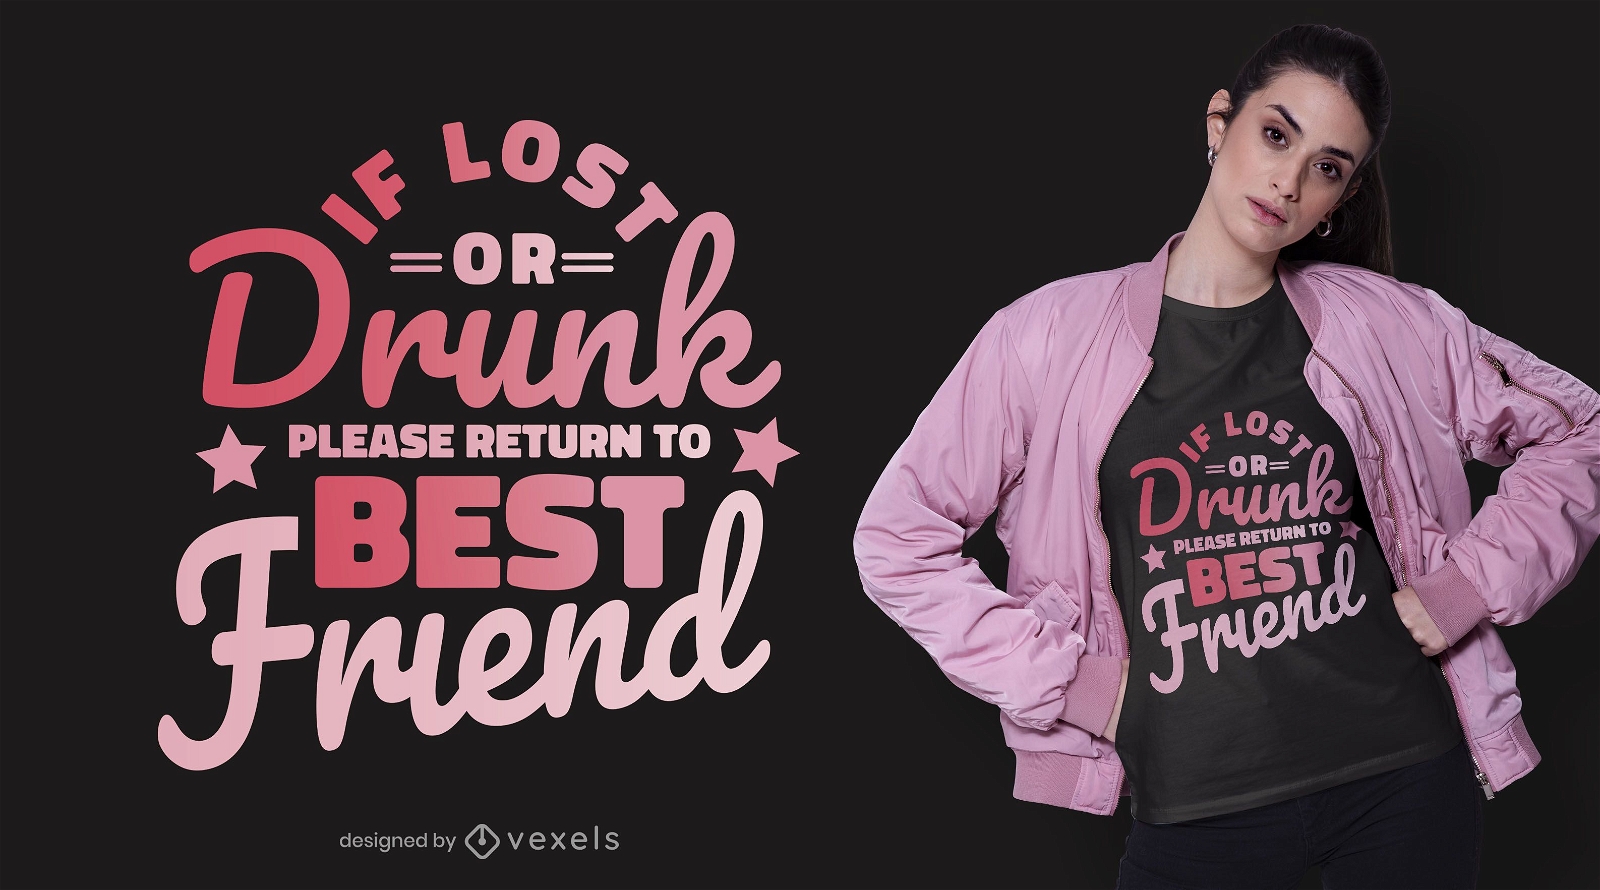 Lost or drunk t-shirt design